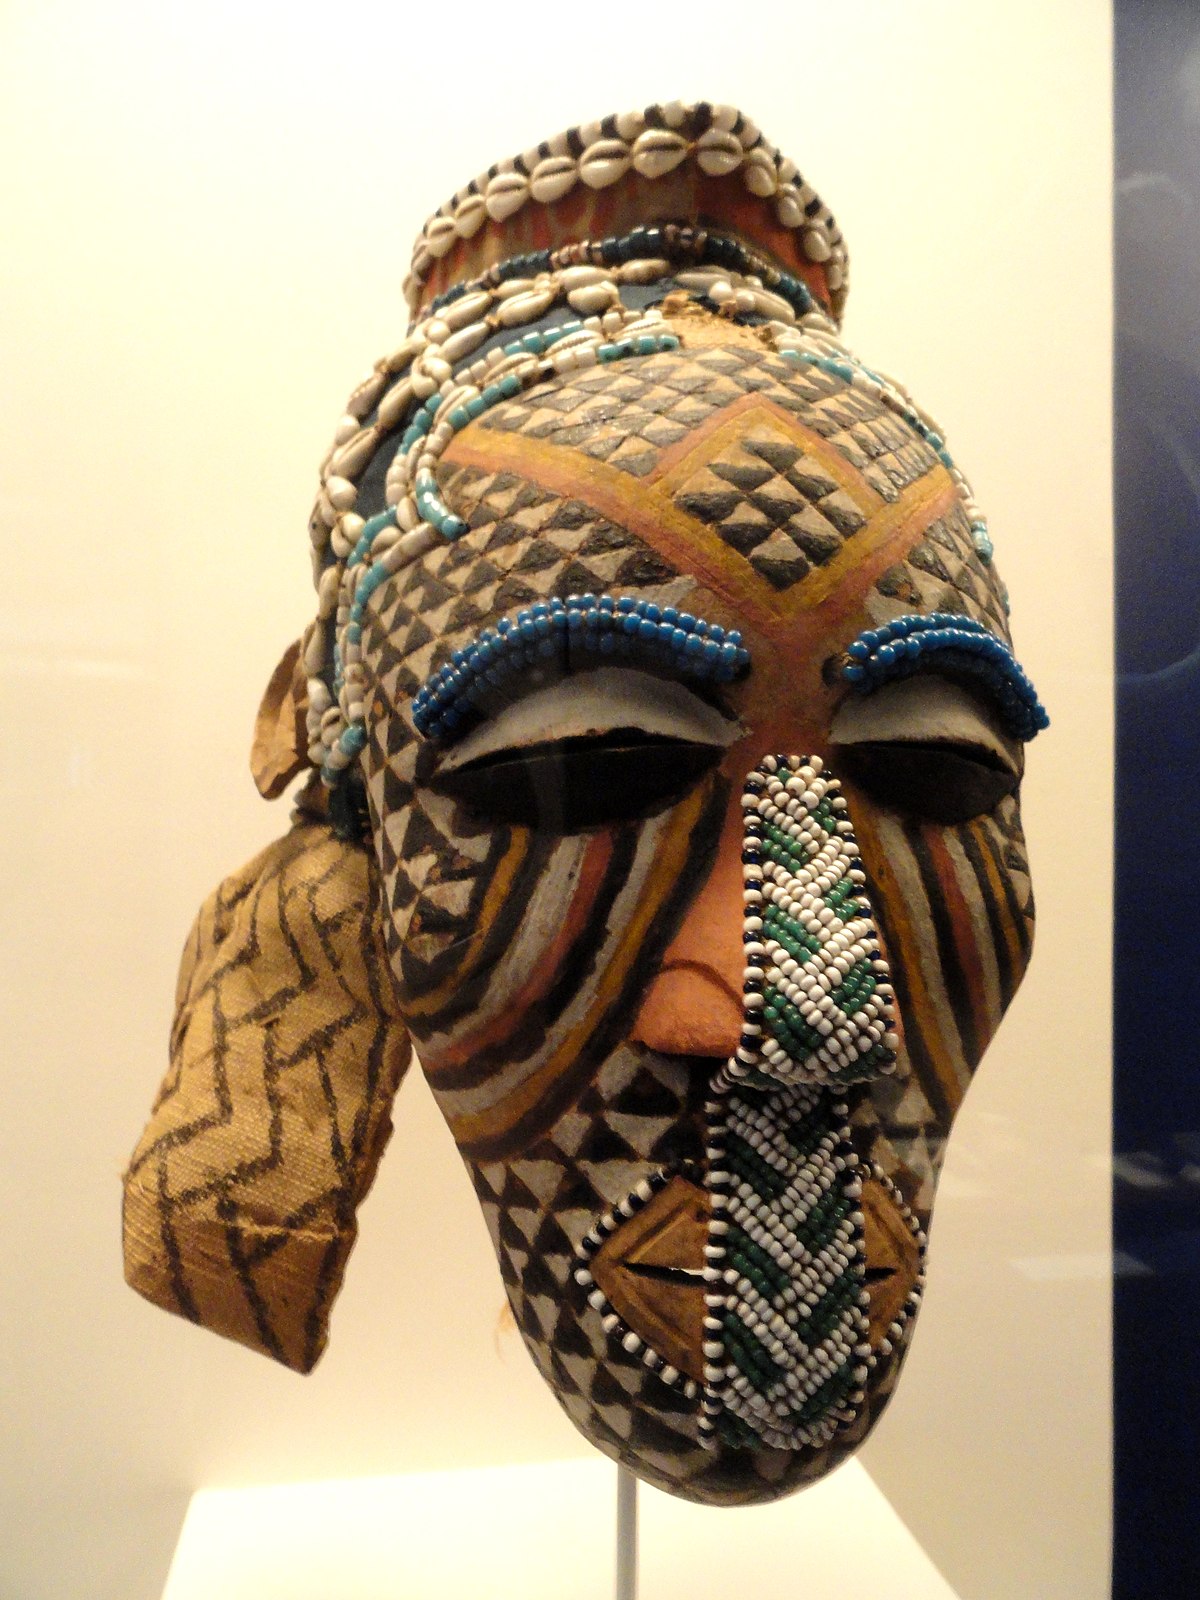 A photo of a Kuba masquerade mask